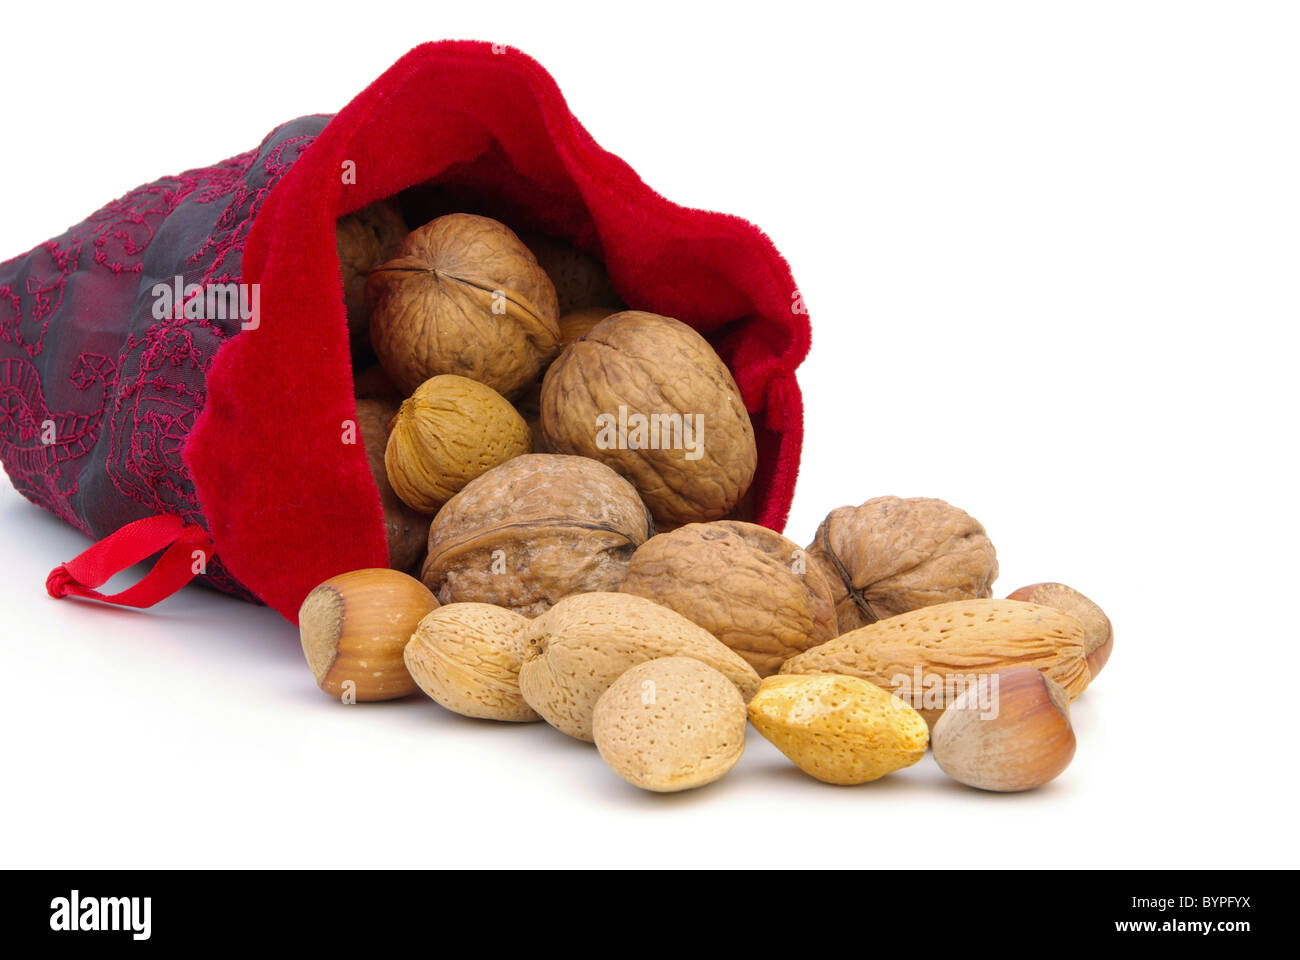 Nüsse im Sack - nuts in sack 01 Stock Photo